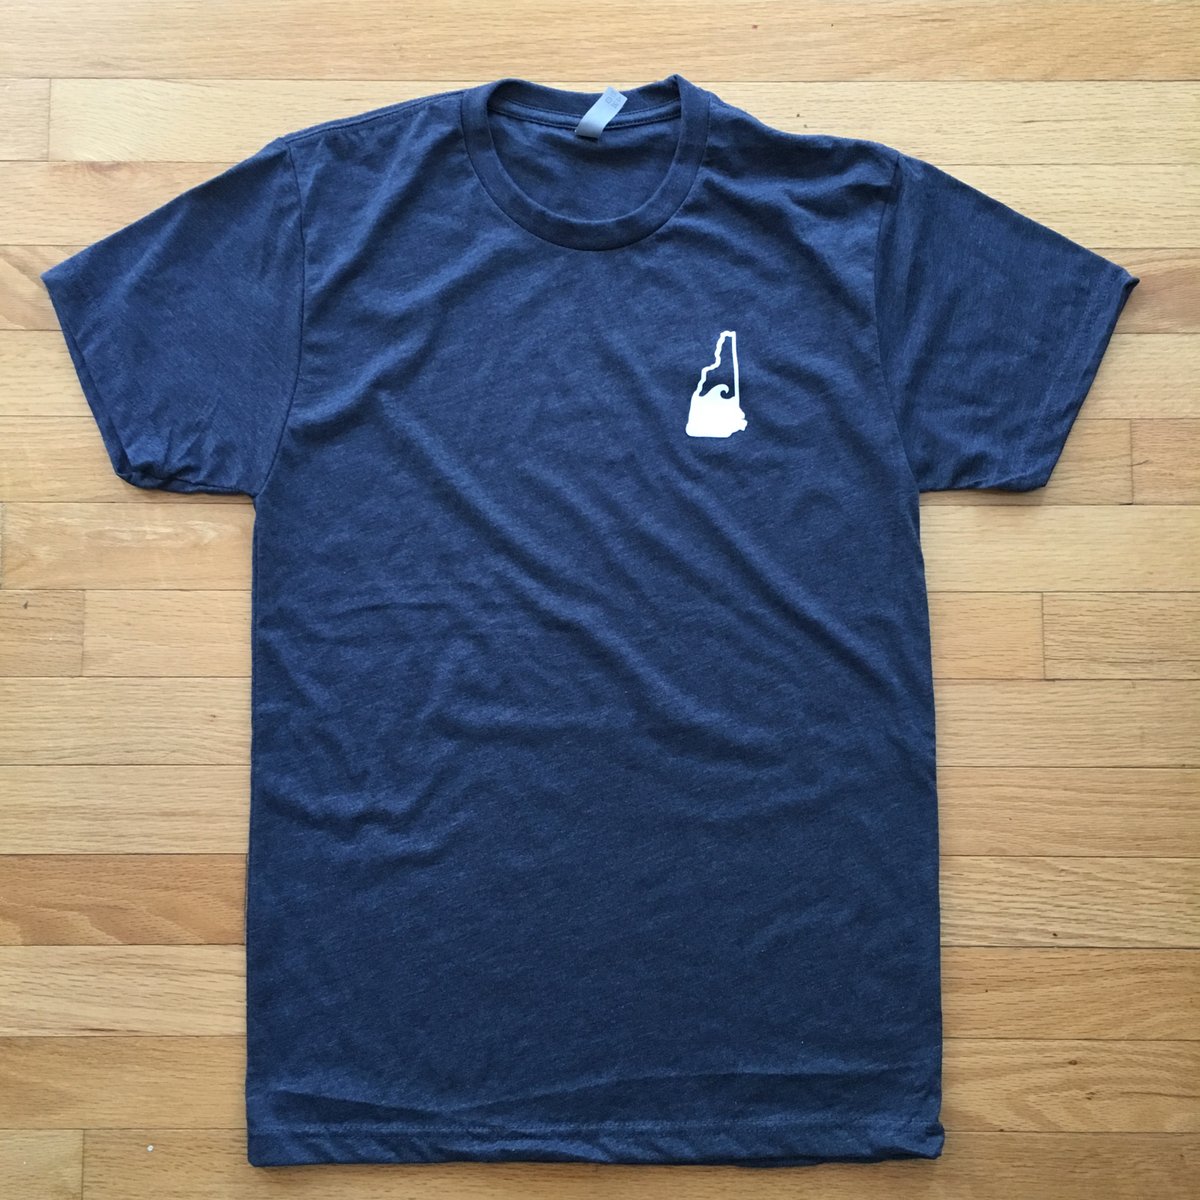 Wave logo t-shirt - unisex | New Hampshire Apparel